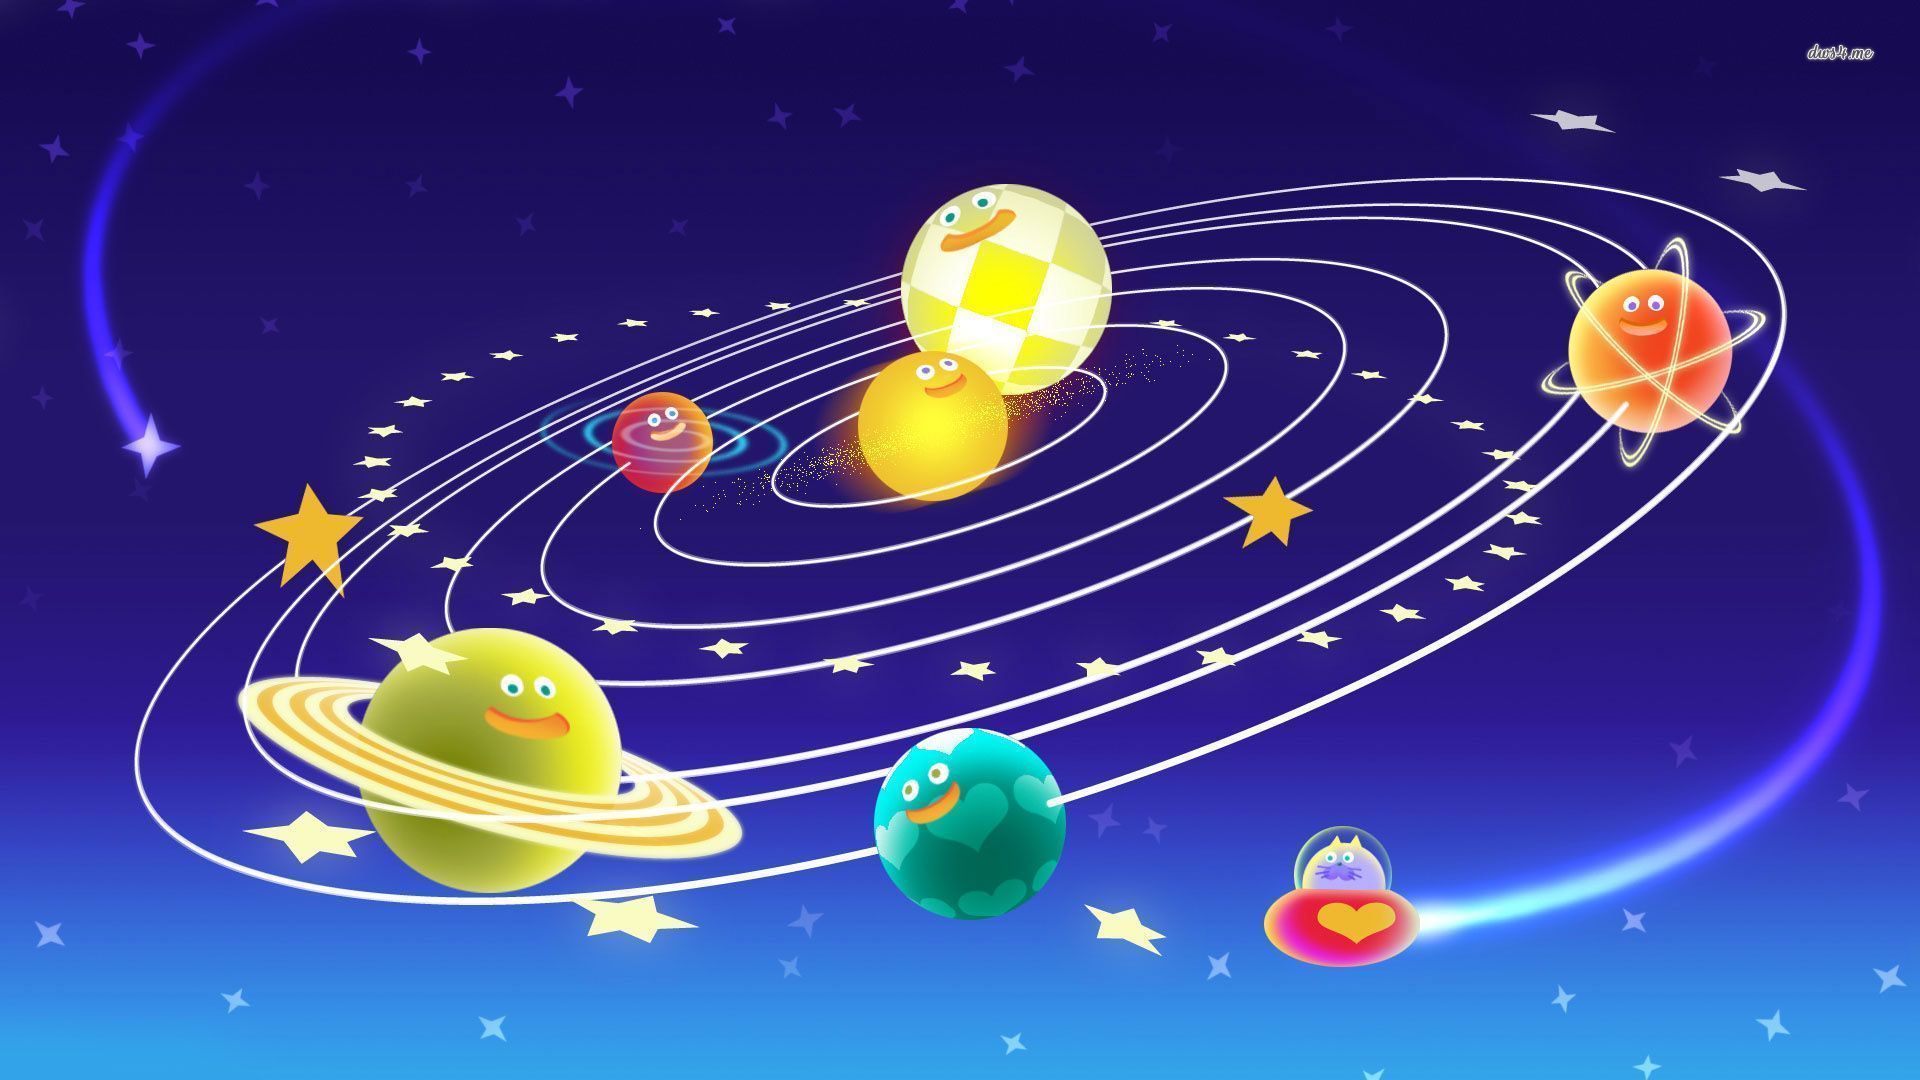 Cute Solar System wallpaper - Digital Art wallpapers - #6351